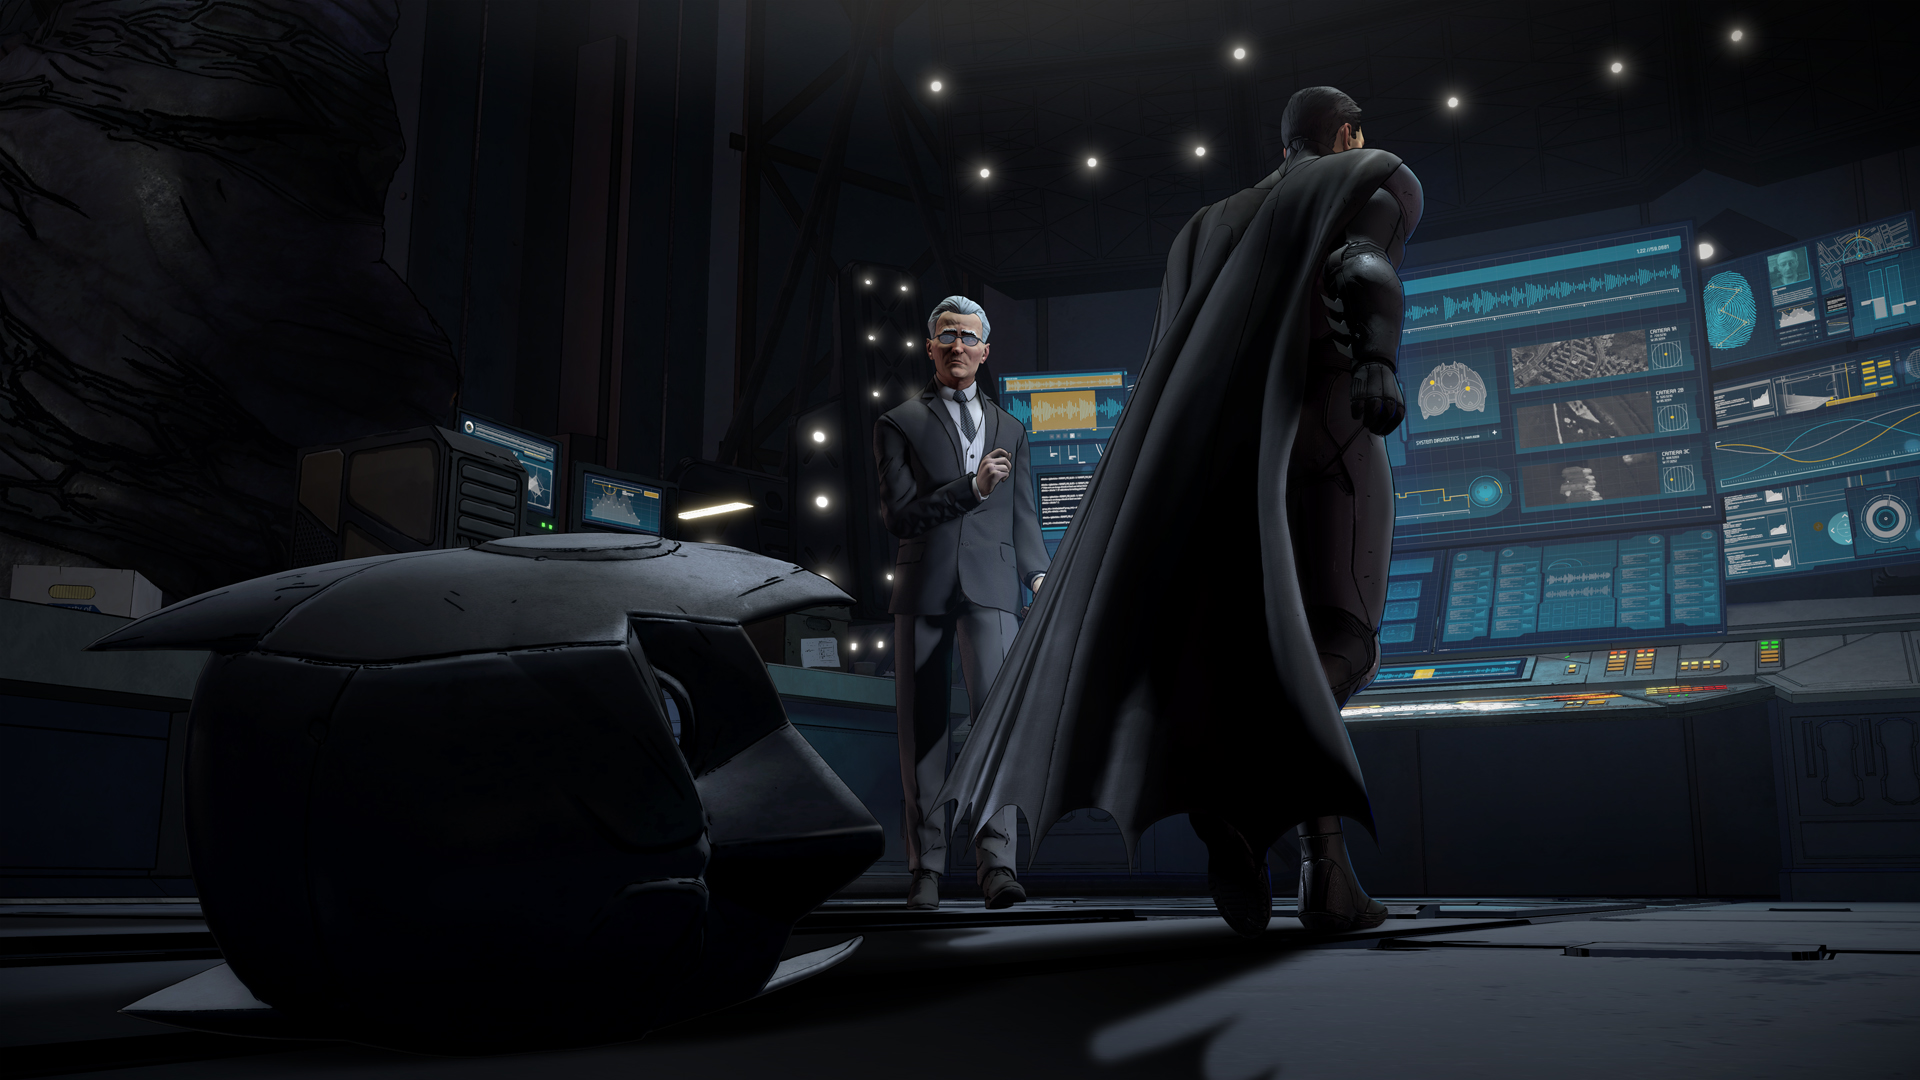 Batman - The Telltale Series screenshot 2